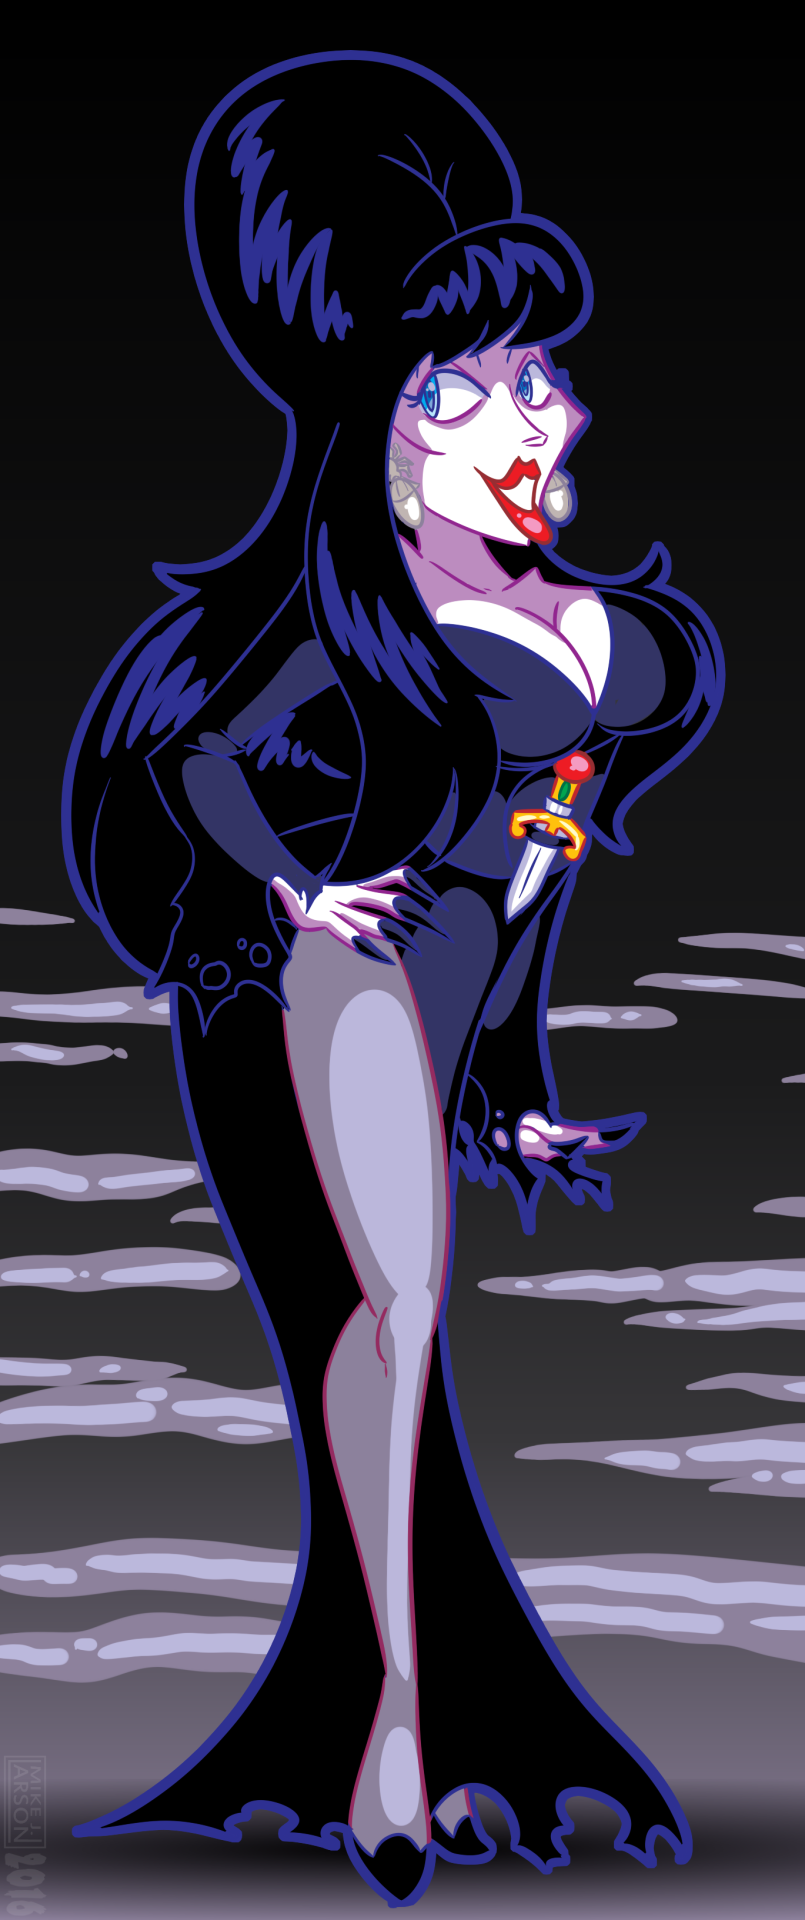 I wanted to draw Elvira&hellip; So I drew Elvira. ‘Nuff said. :/